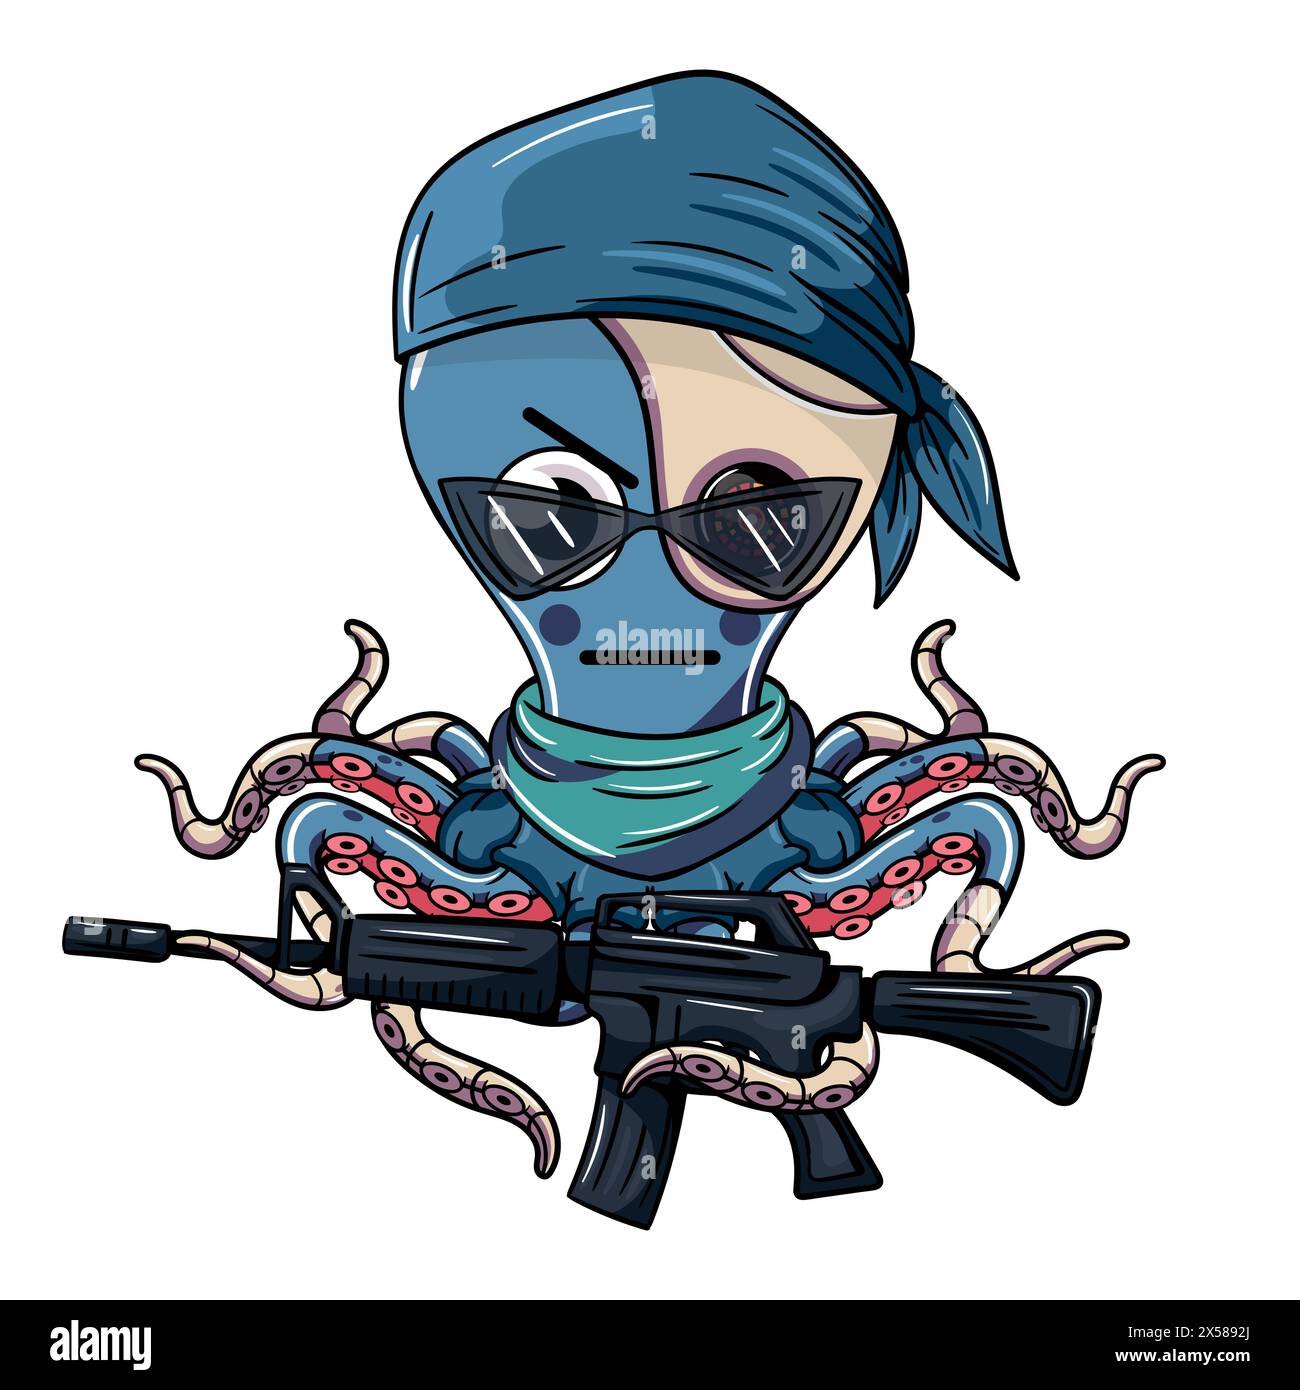 Cartoon Militärsoldat Cyborg Krake Charakter mit moderner Maschinenpistole. Illustration für Fantasy, Science Fiction und Adventure Comics Stock Vektor